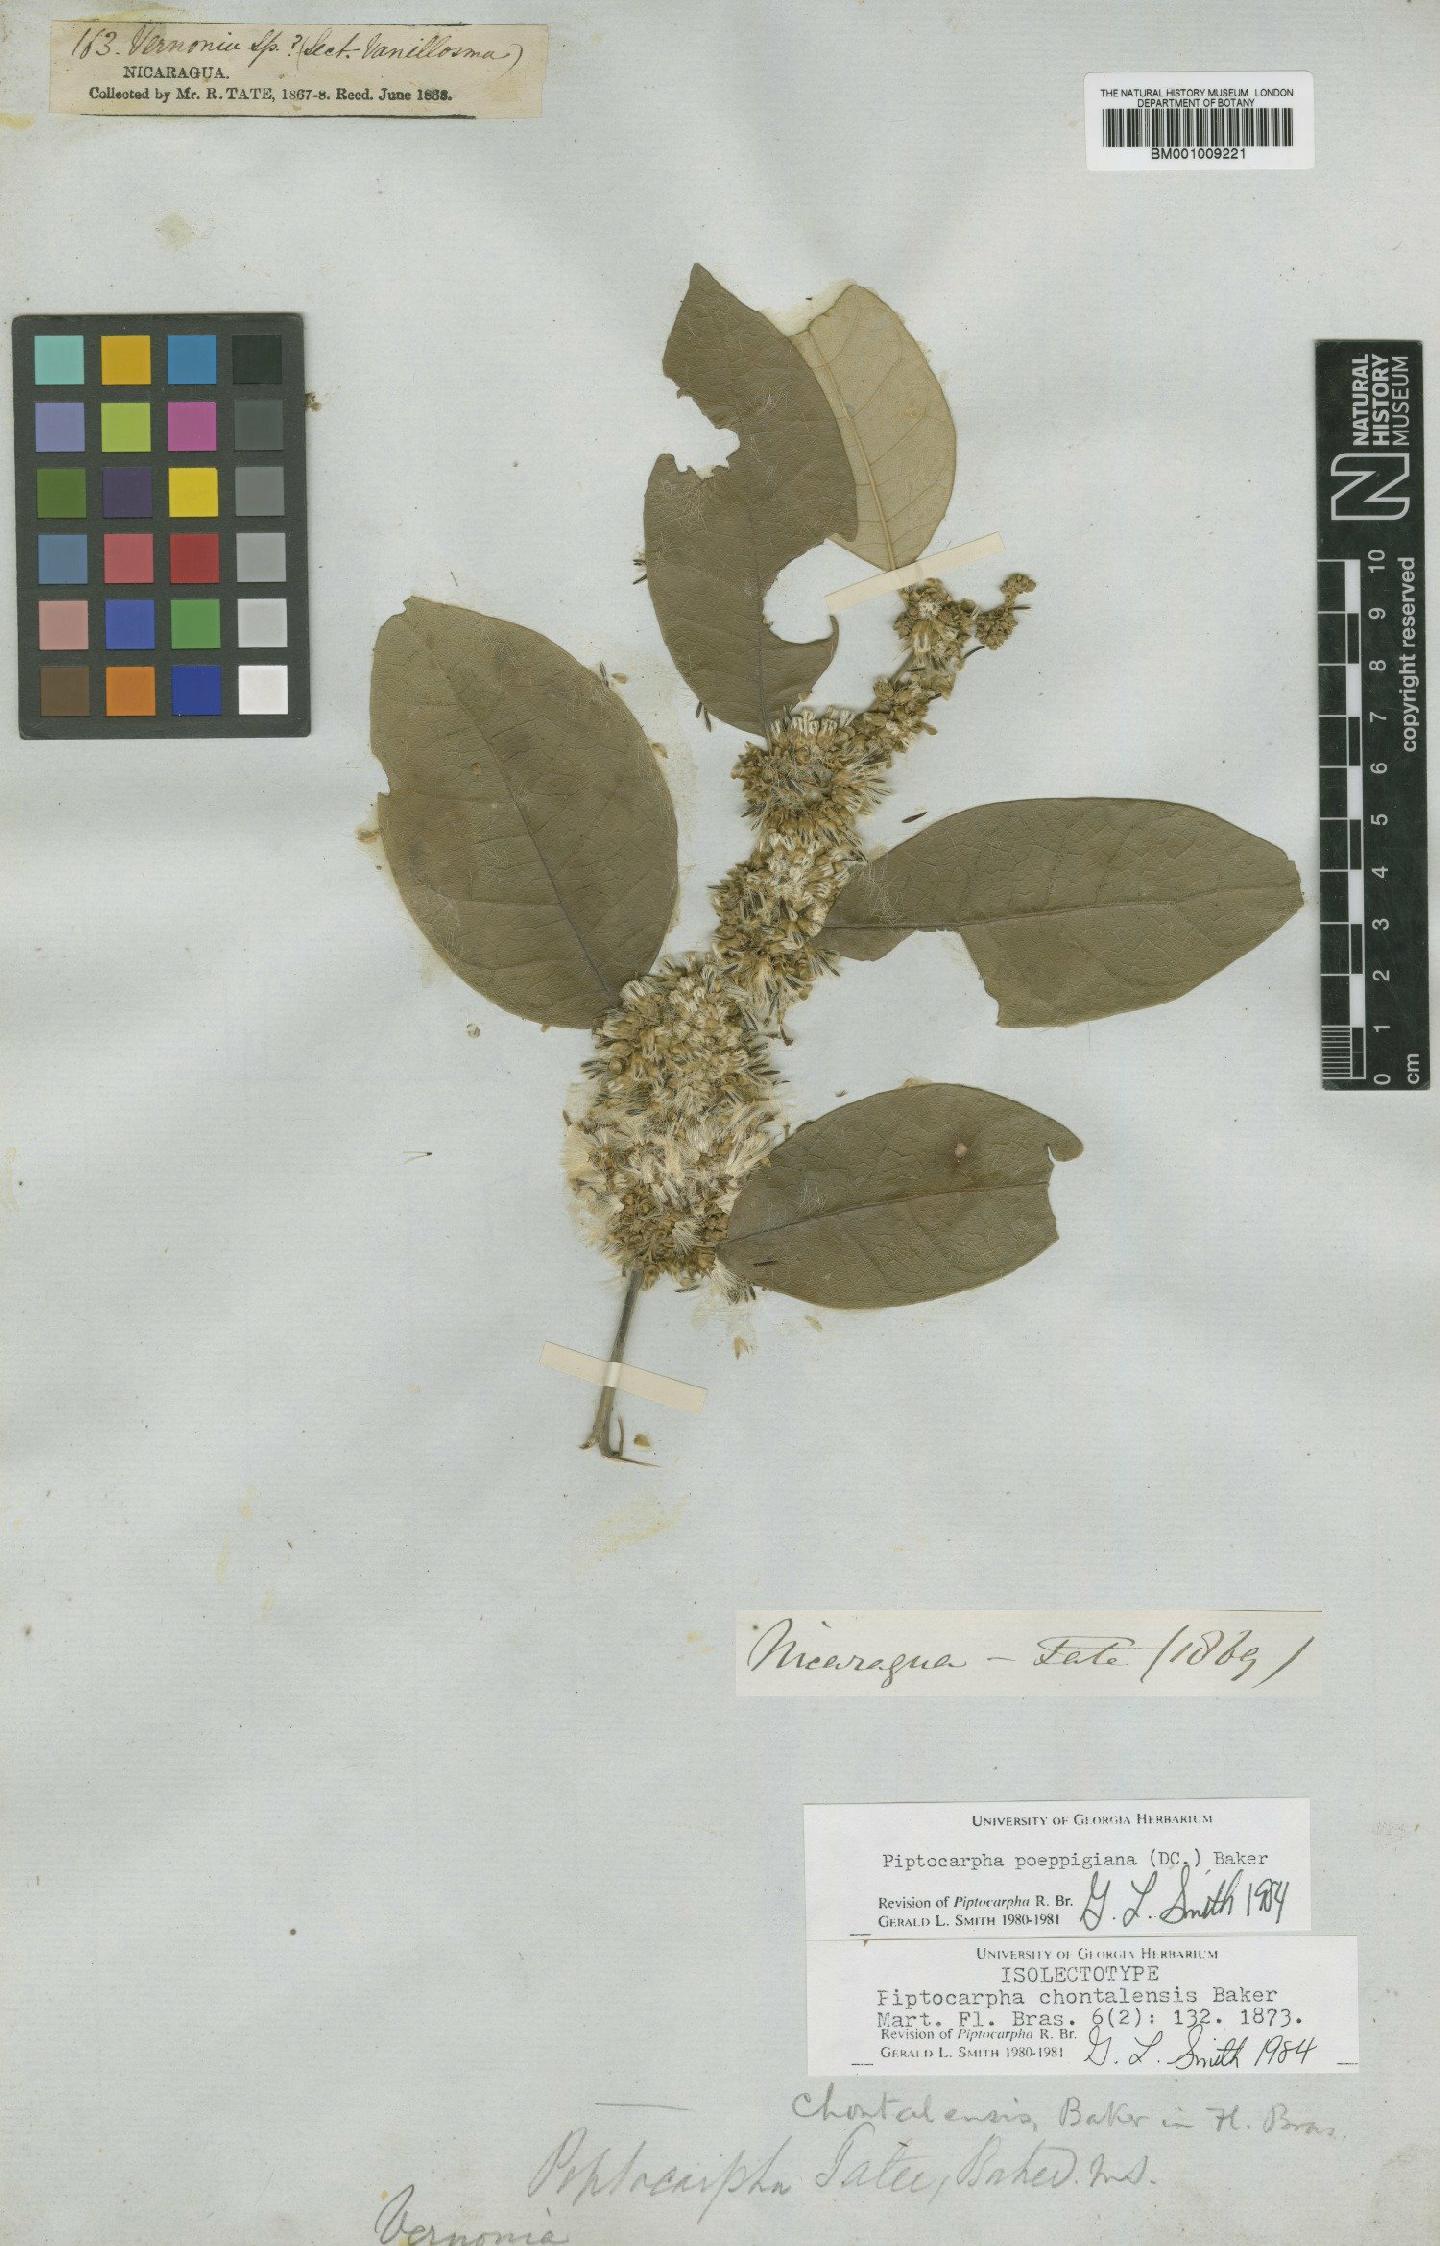 To NHMUK collection (Piptocarpha poeppigiana (DC.) Baker; Isolectotype; NHMUK:ecatalogue:557668)